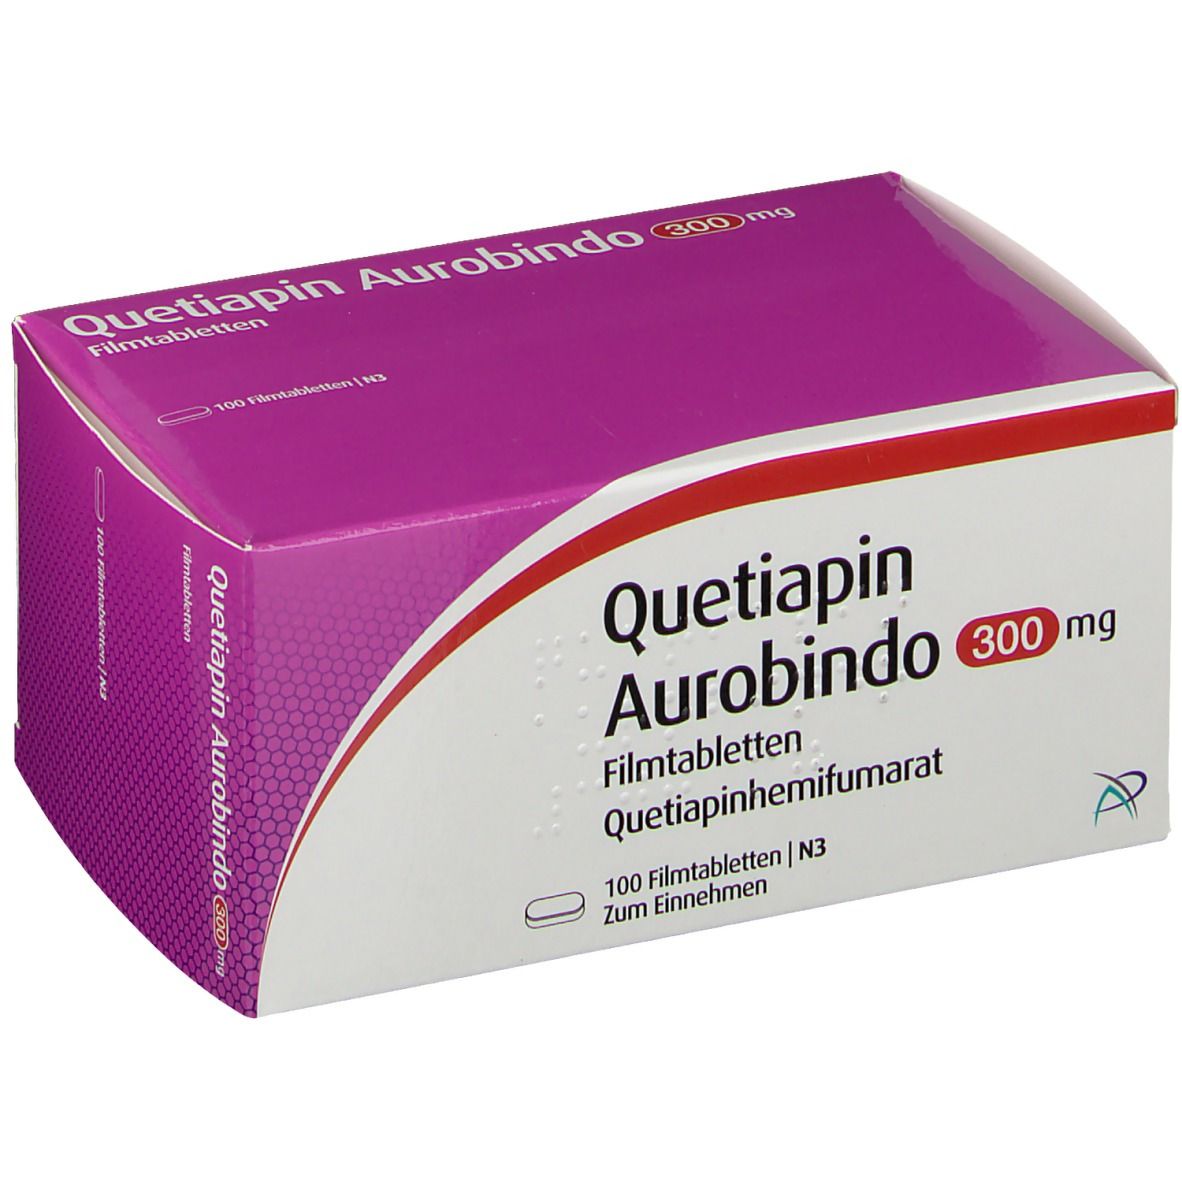 Quetiapin Aurobindo 300 mg